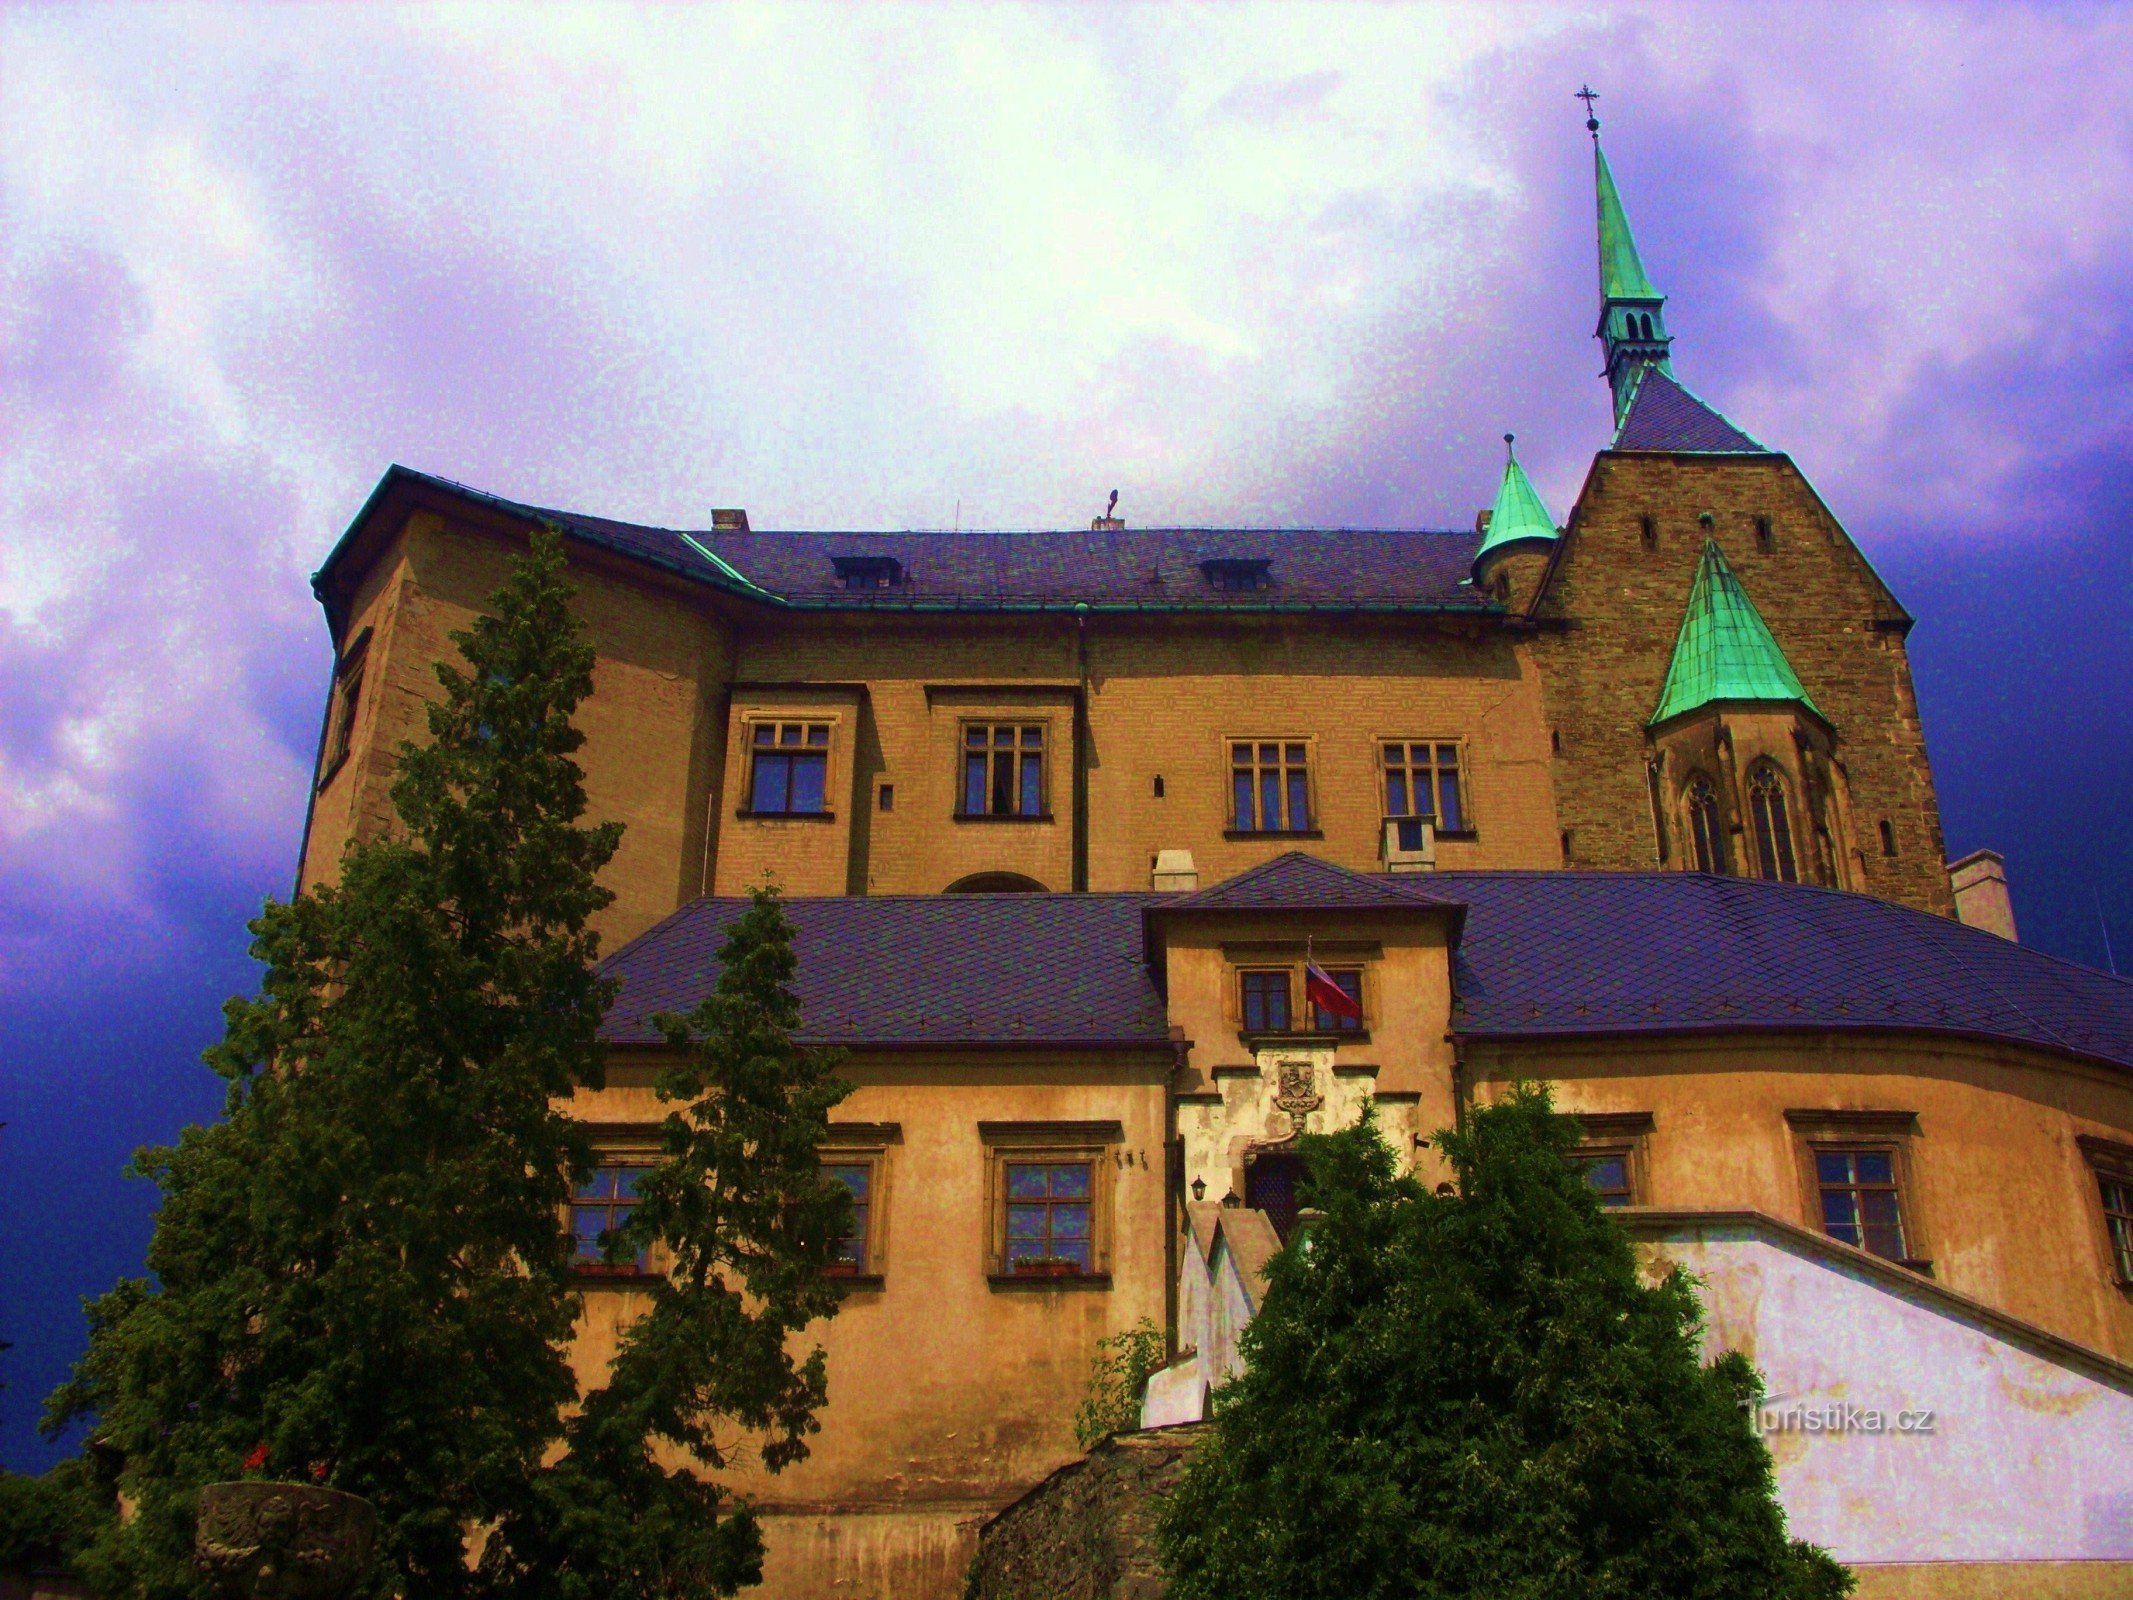 Zvijezda na brdu - dvorac Šternberk